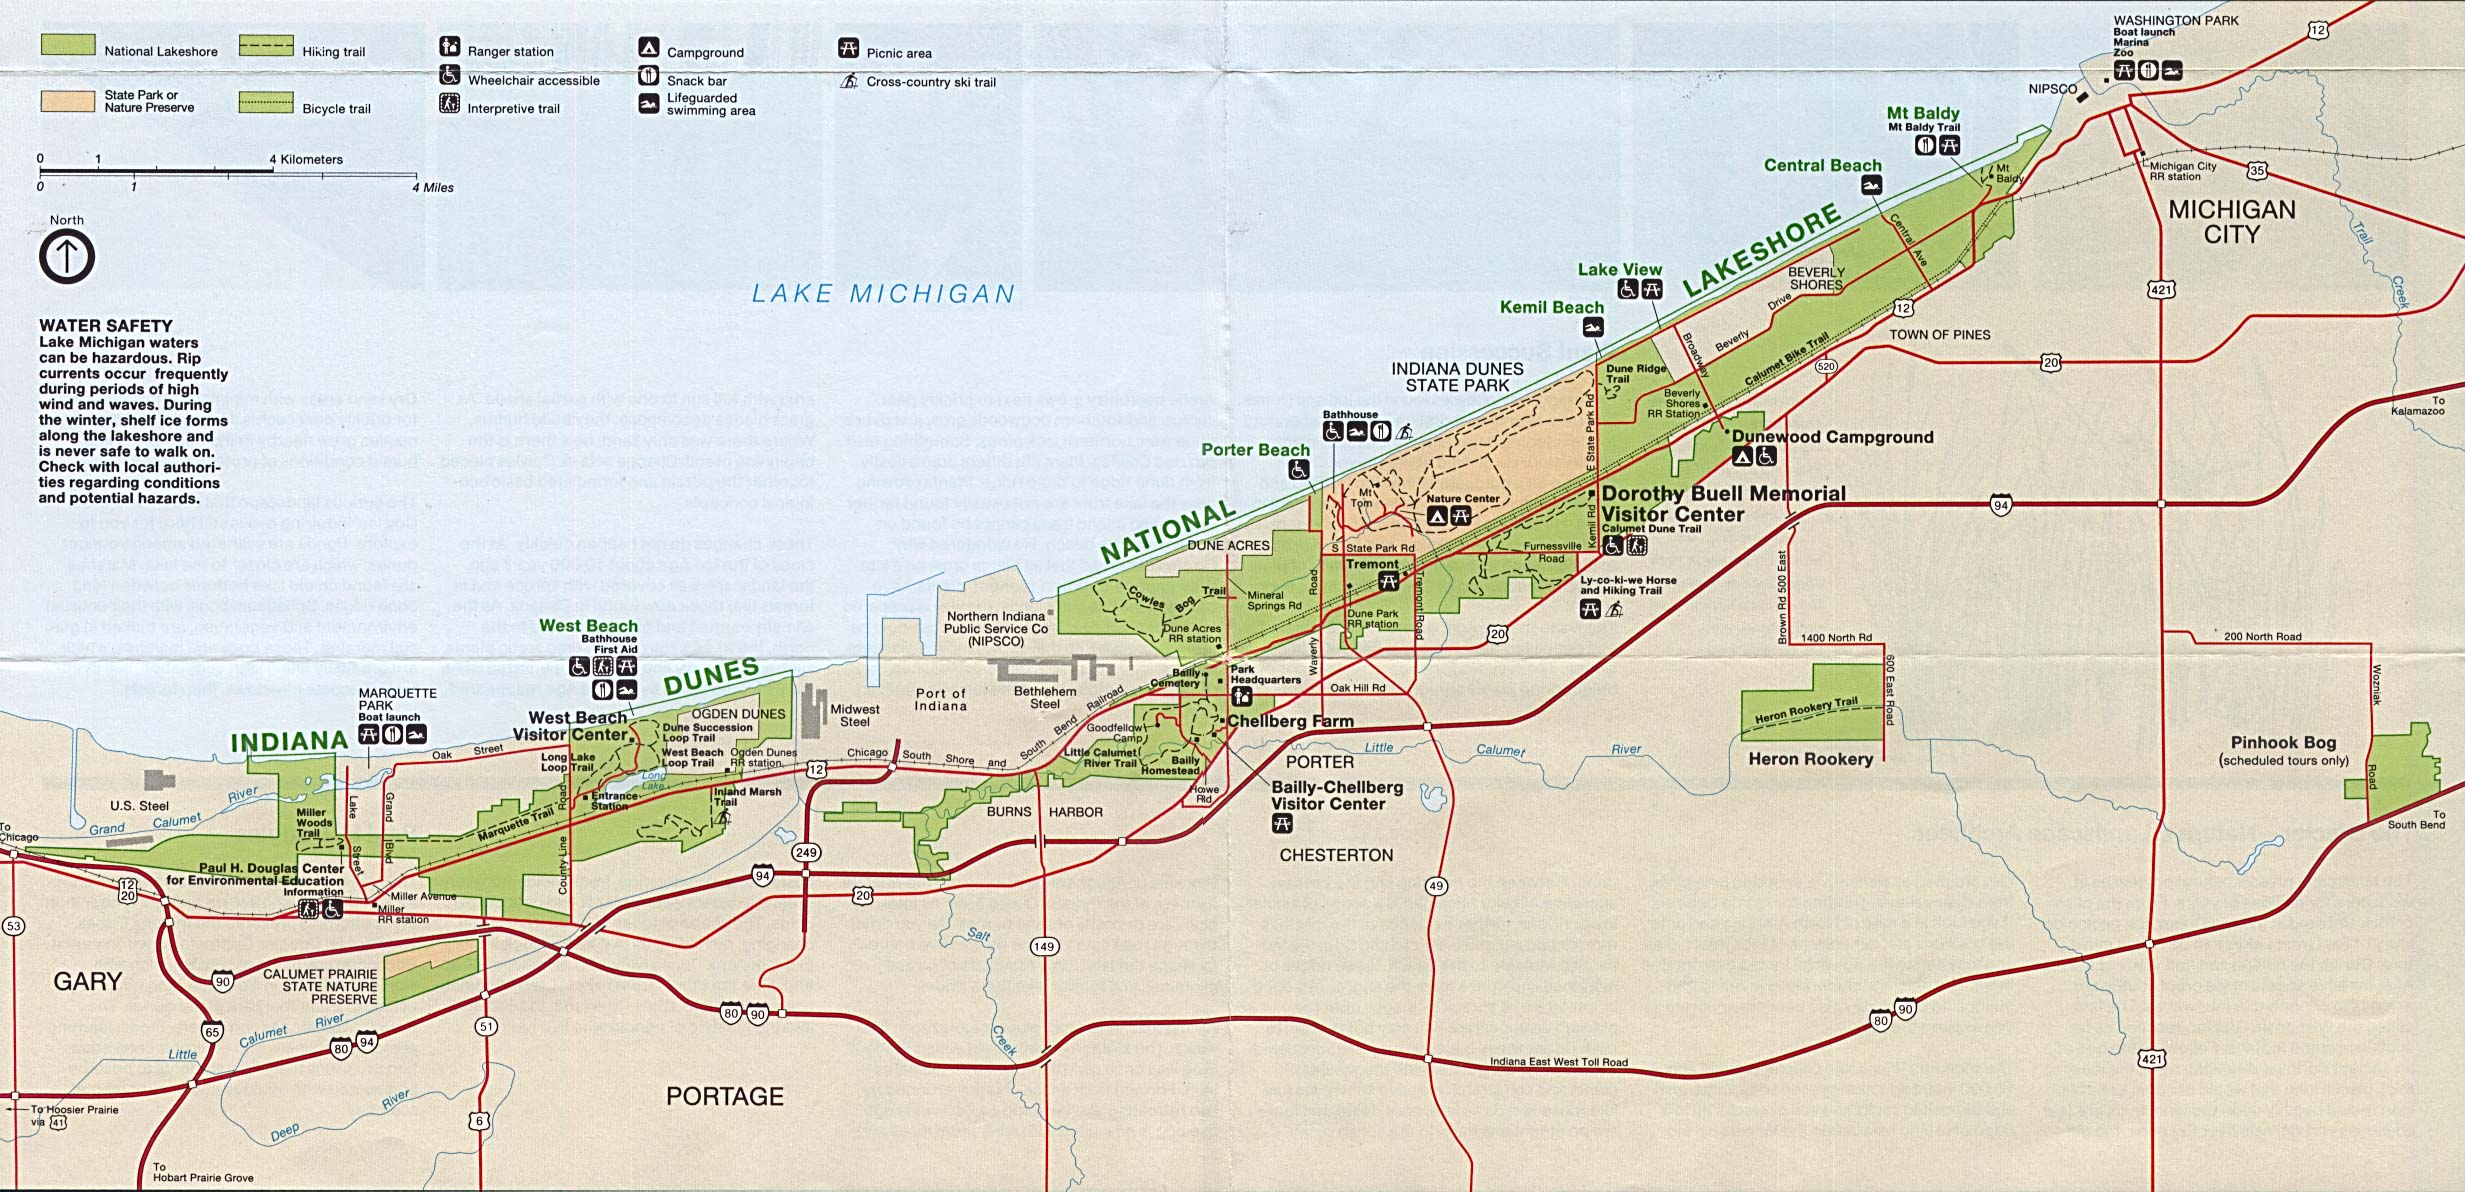  Maps of United States National Parks, Monuments and Historic Sites Indiana Dunes National Lakeshore [Indiana] (Park Map) 1994 (507K) 